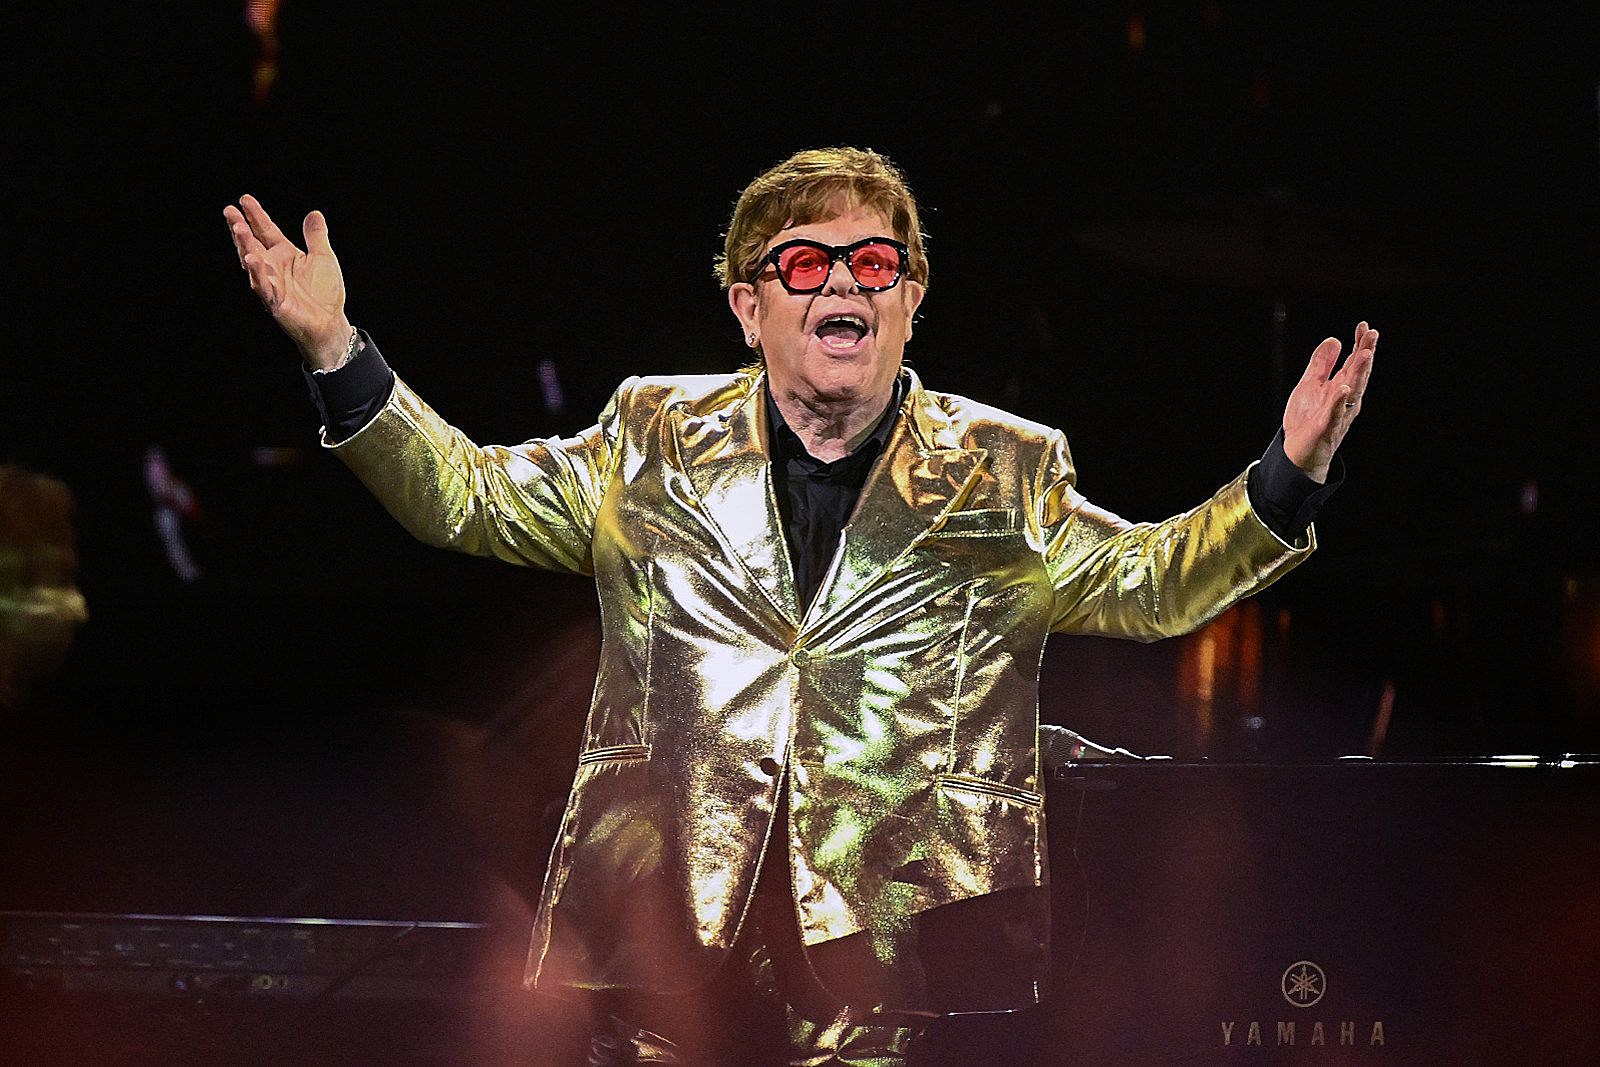 Elton John Sunglasses Photos - 50 Years of Elton John's Fabulously